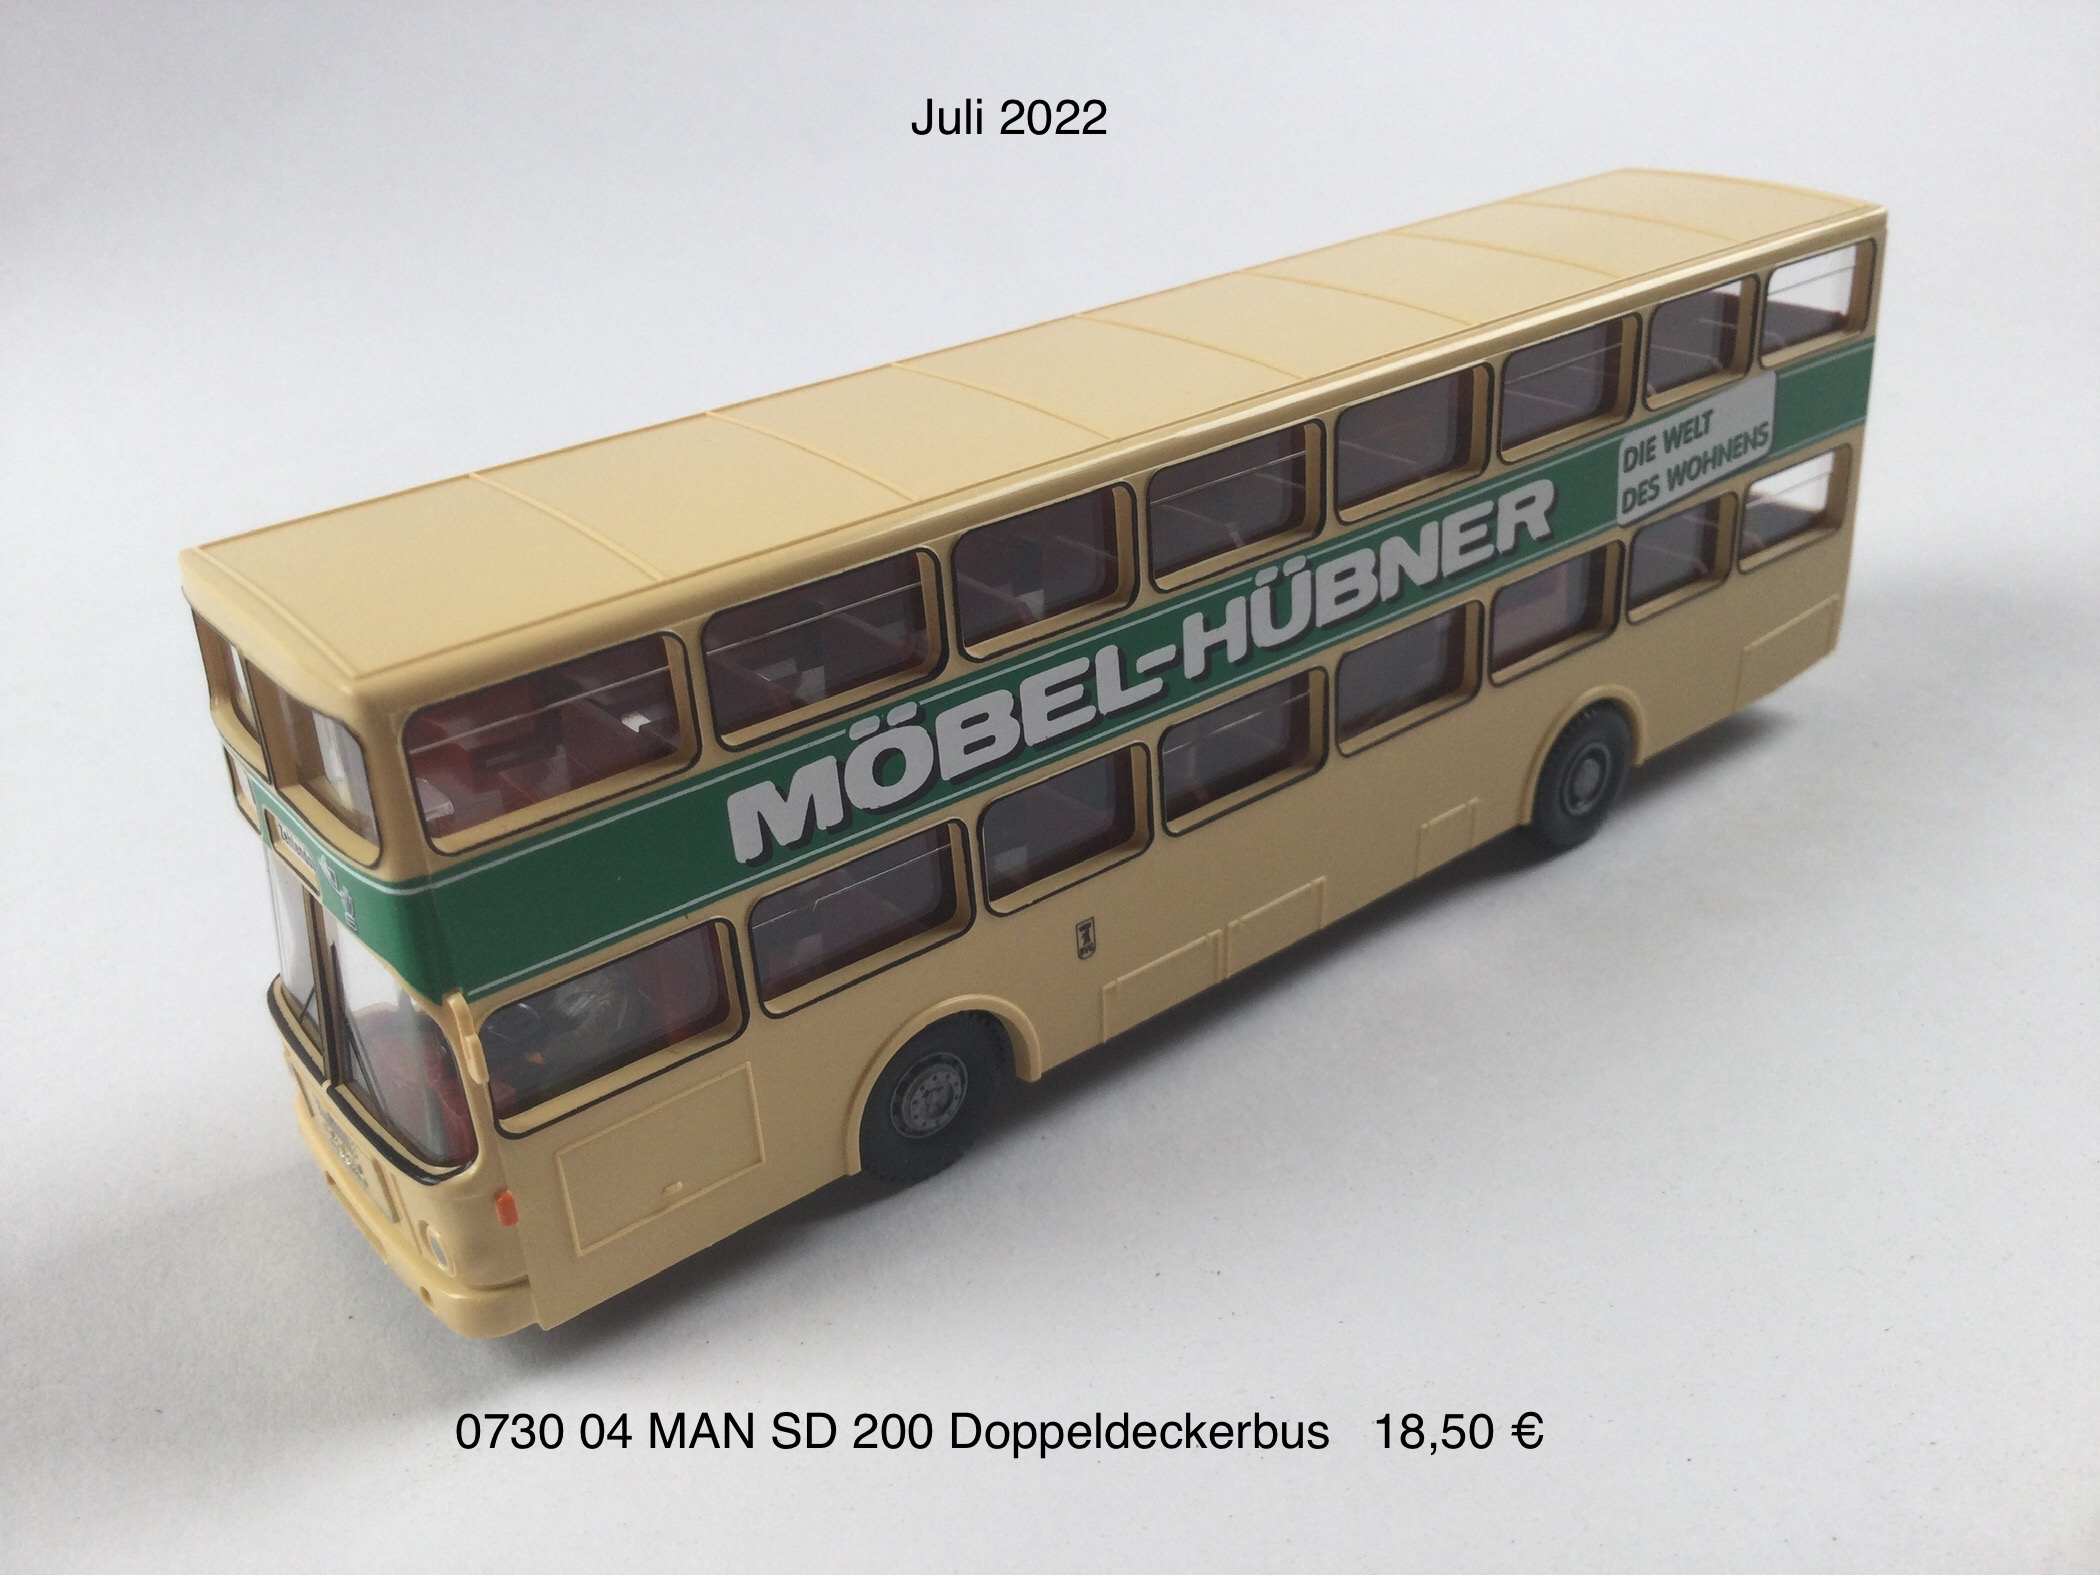 MAN SD 200 Doppeldeckerbus